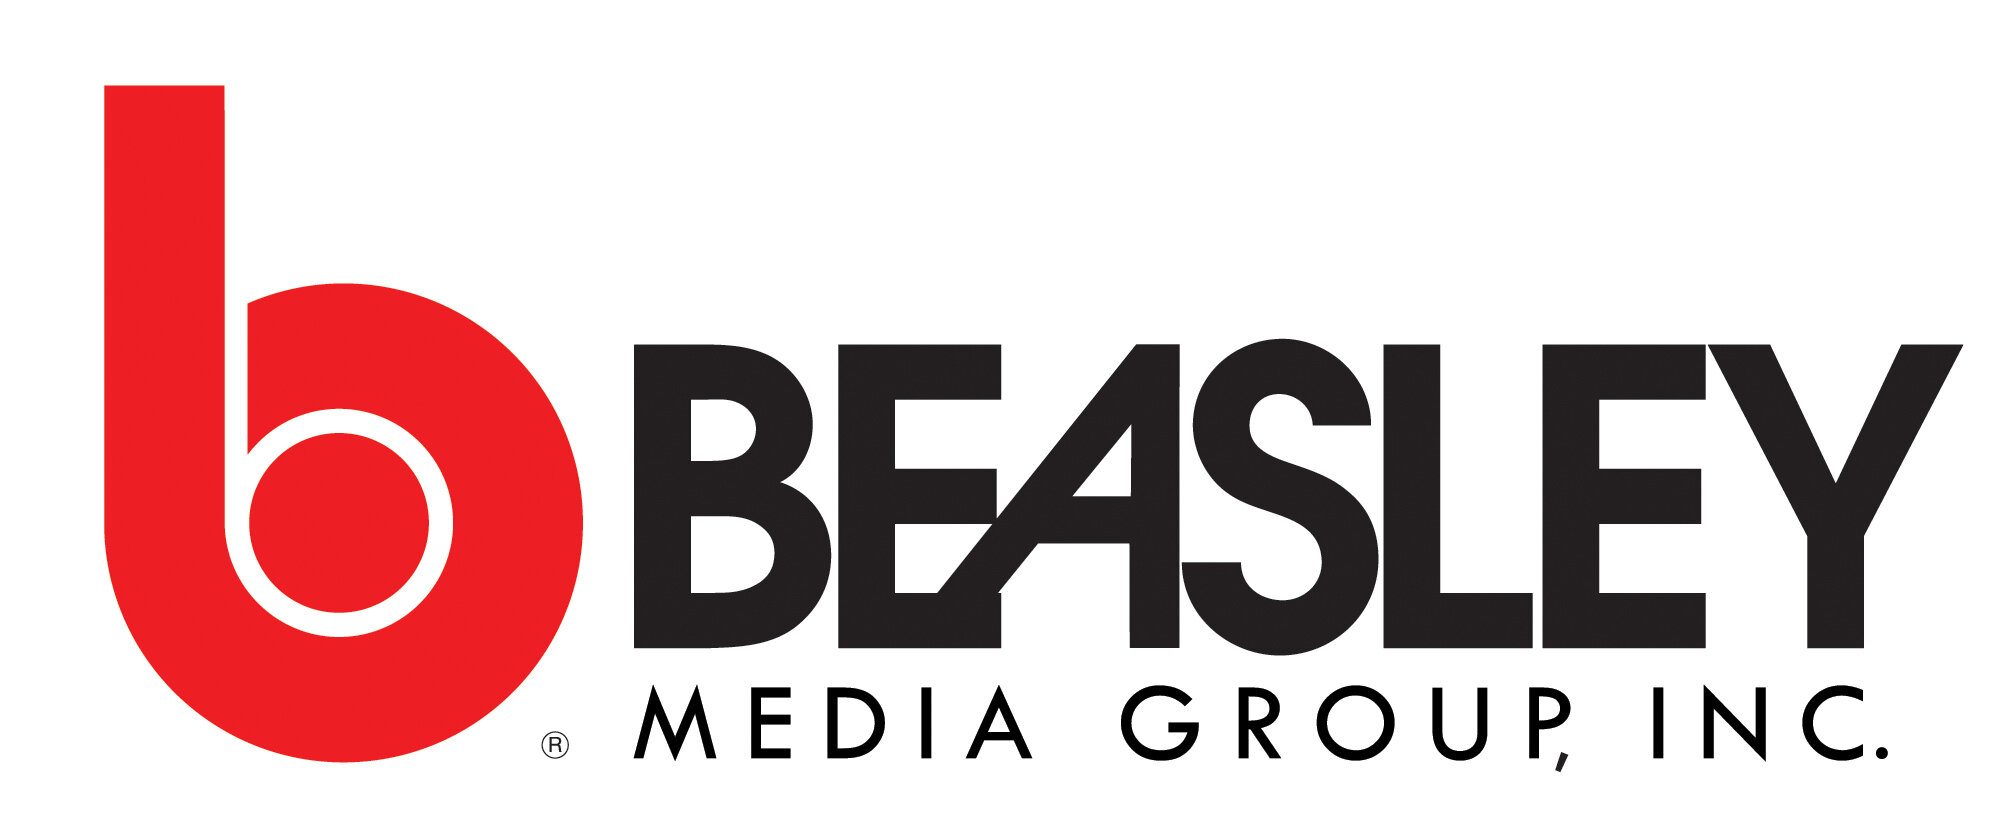 Beasley Media Group-Directory Page Small Logo.jpg